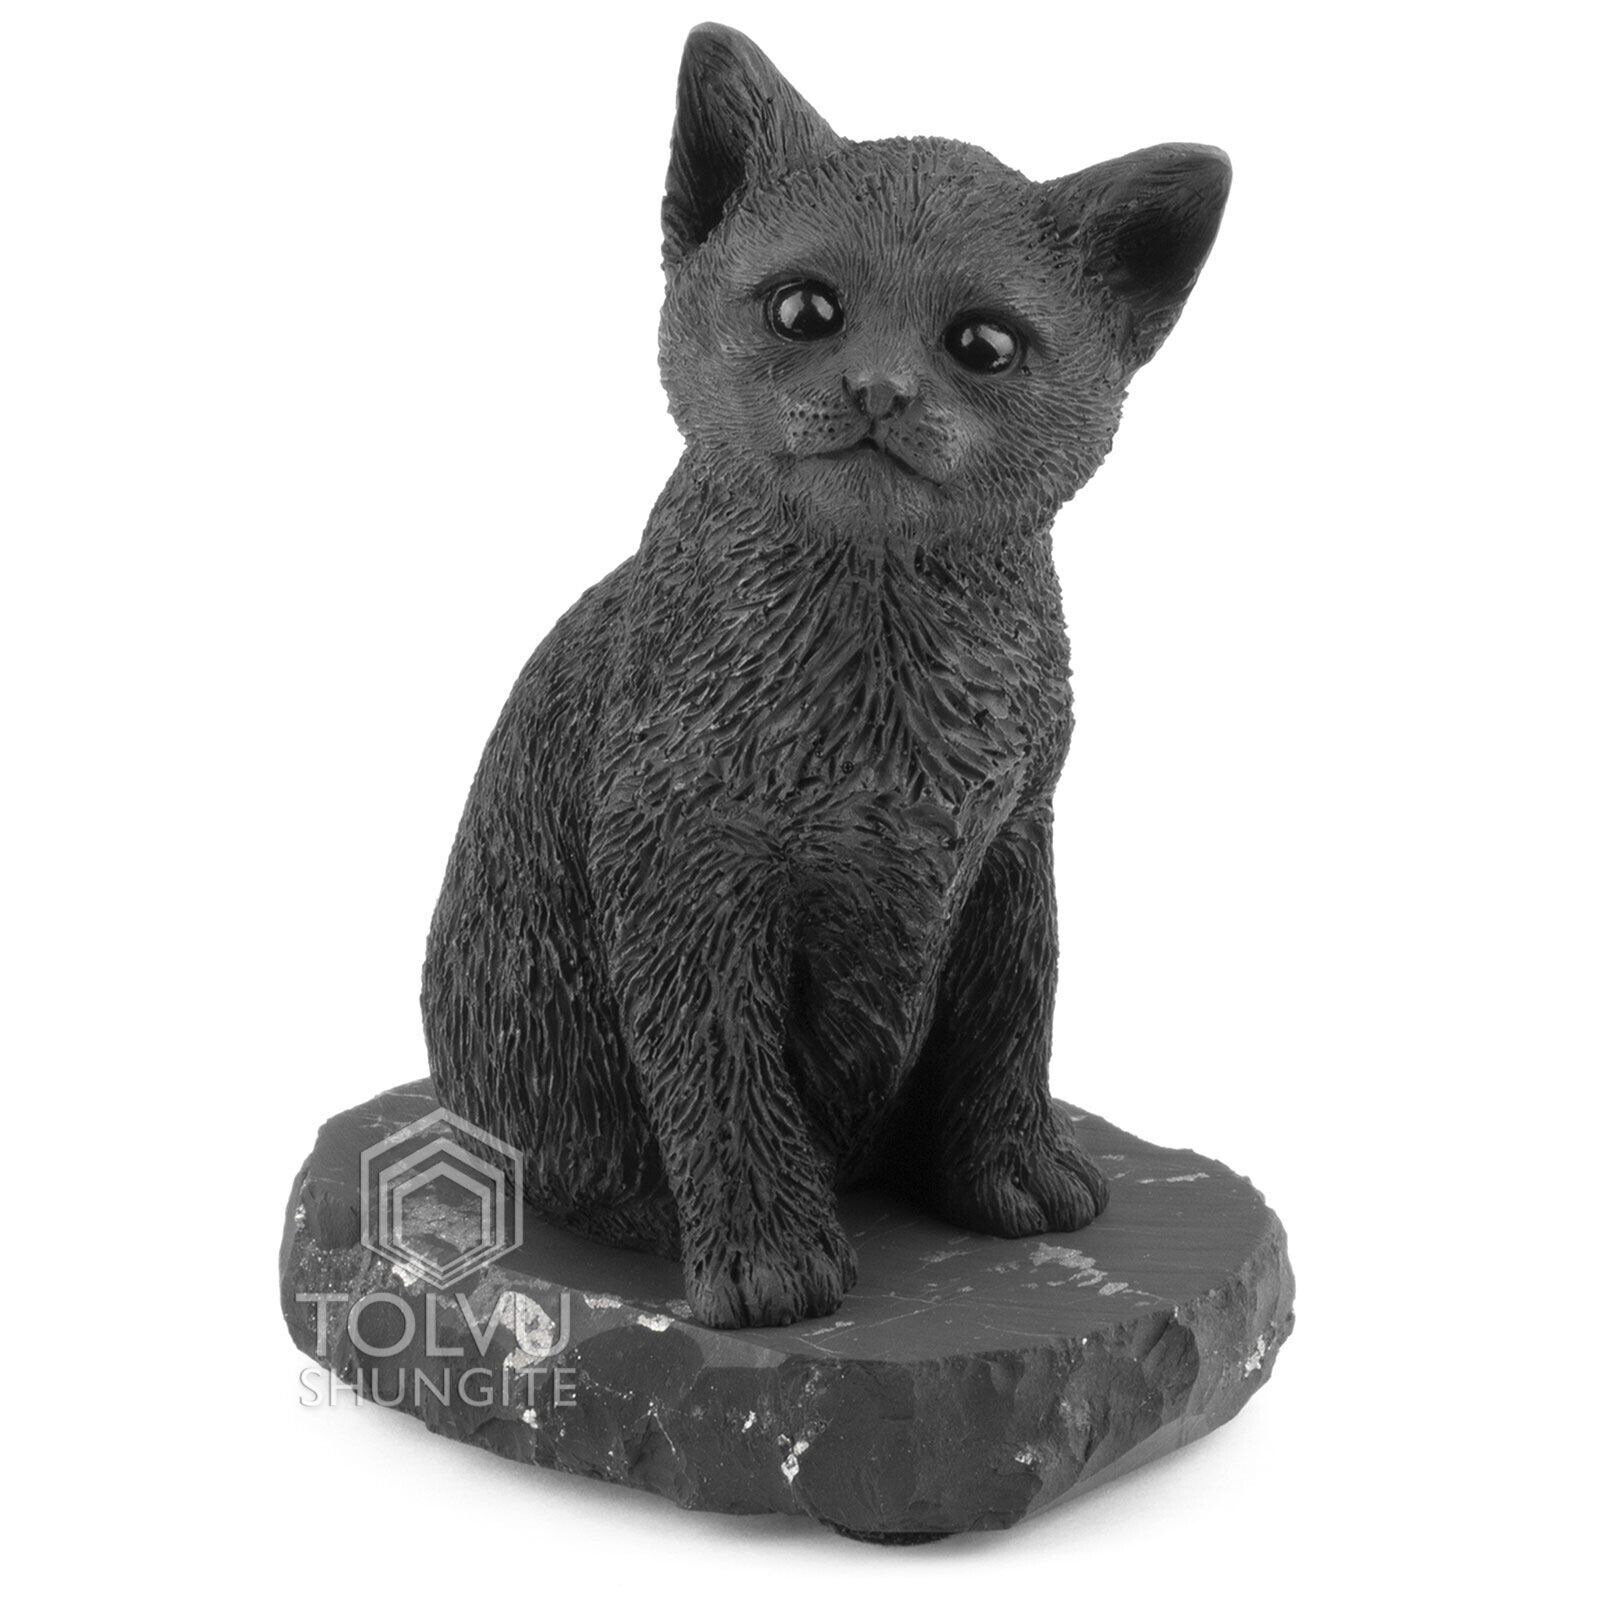 Shungite figure Cat, Statuette made of shungite stone, Tolvu